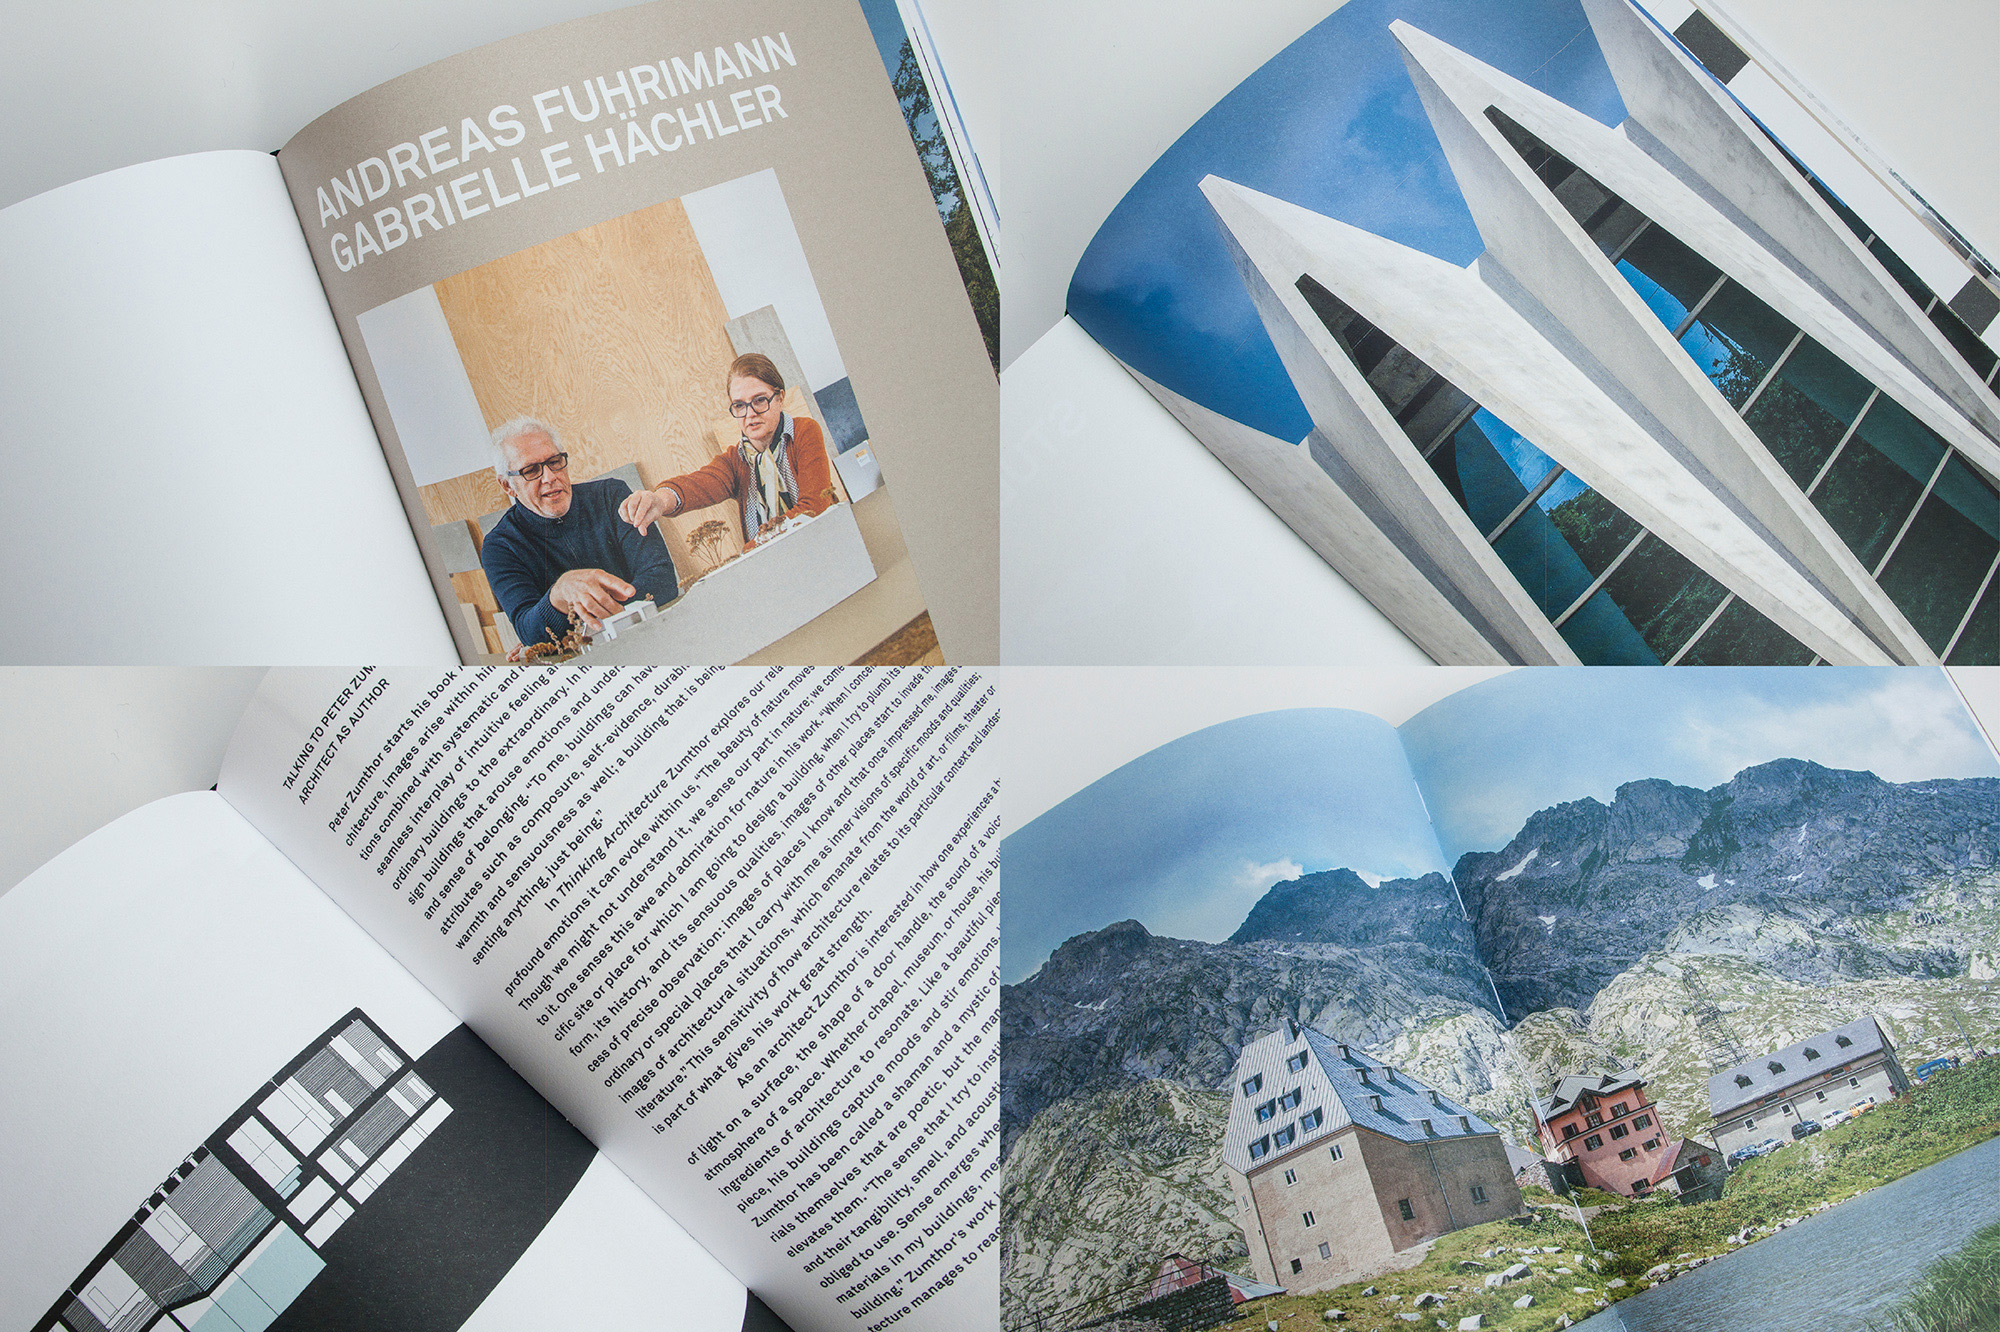 Swiss Sensibility: The Culture of Architecture in Switzerland, Birkhäuser Verlag Basel